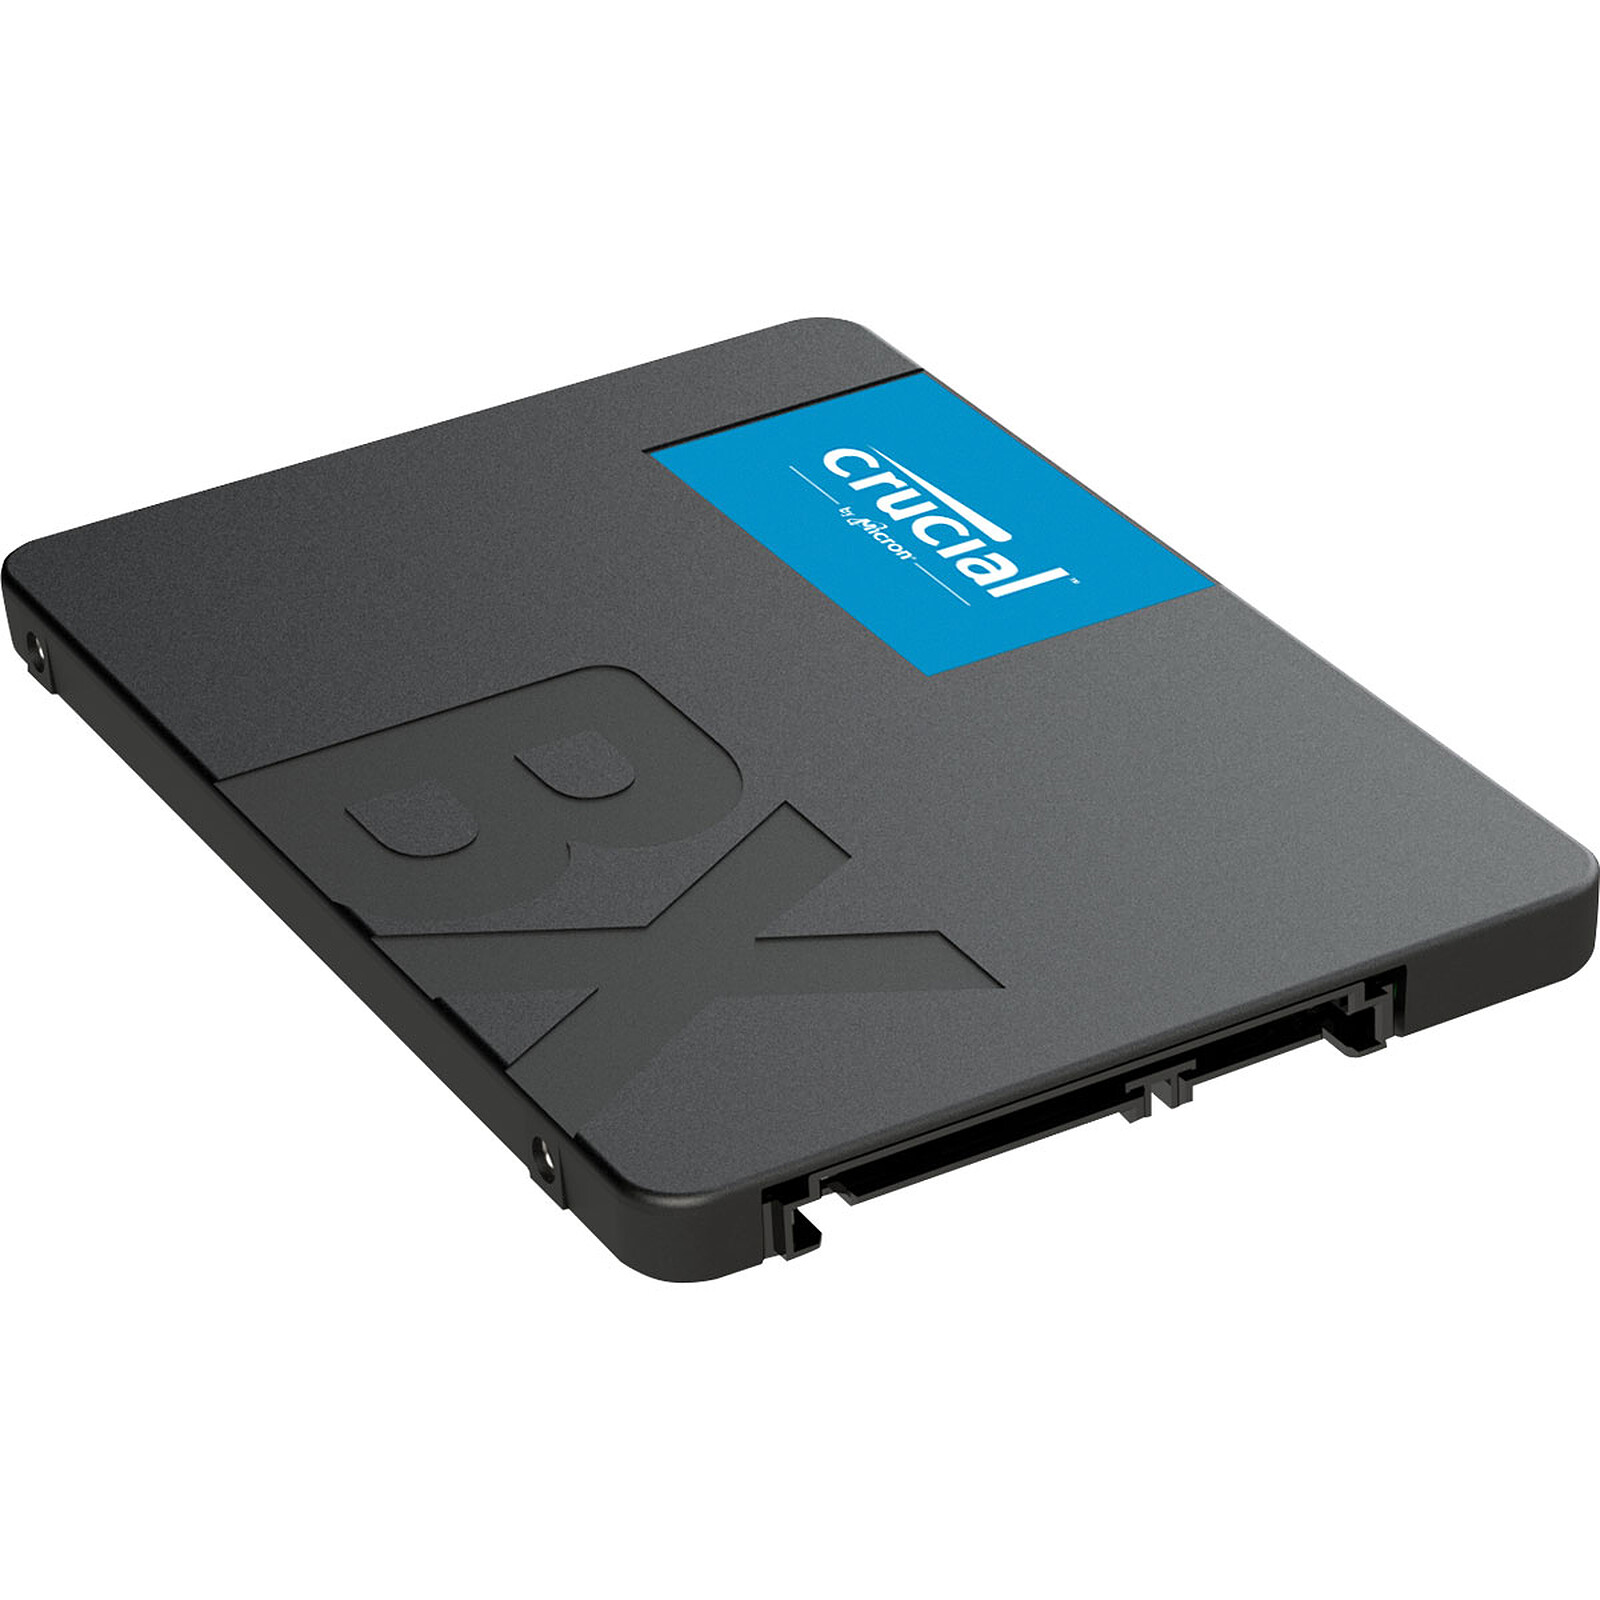 Crucial BX500 240 GB - Disco SSD Crucial en LDLC.com